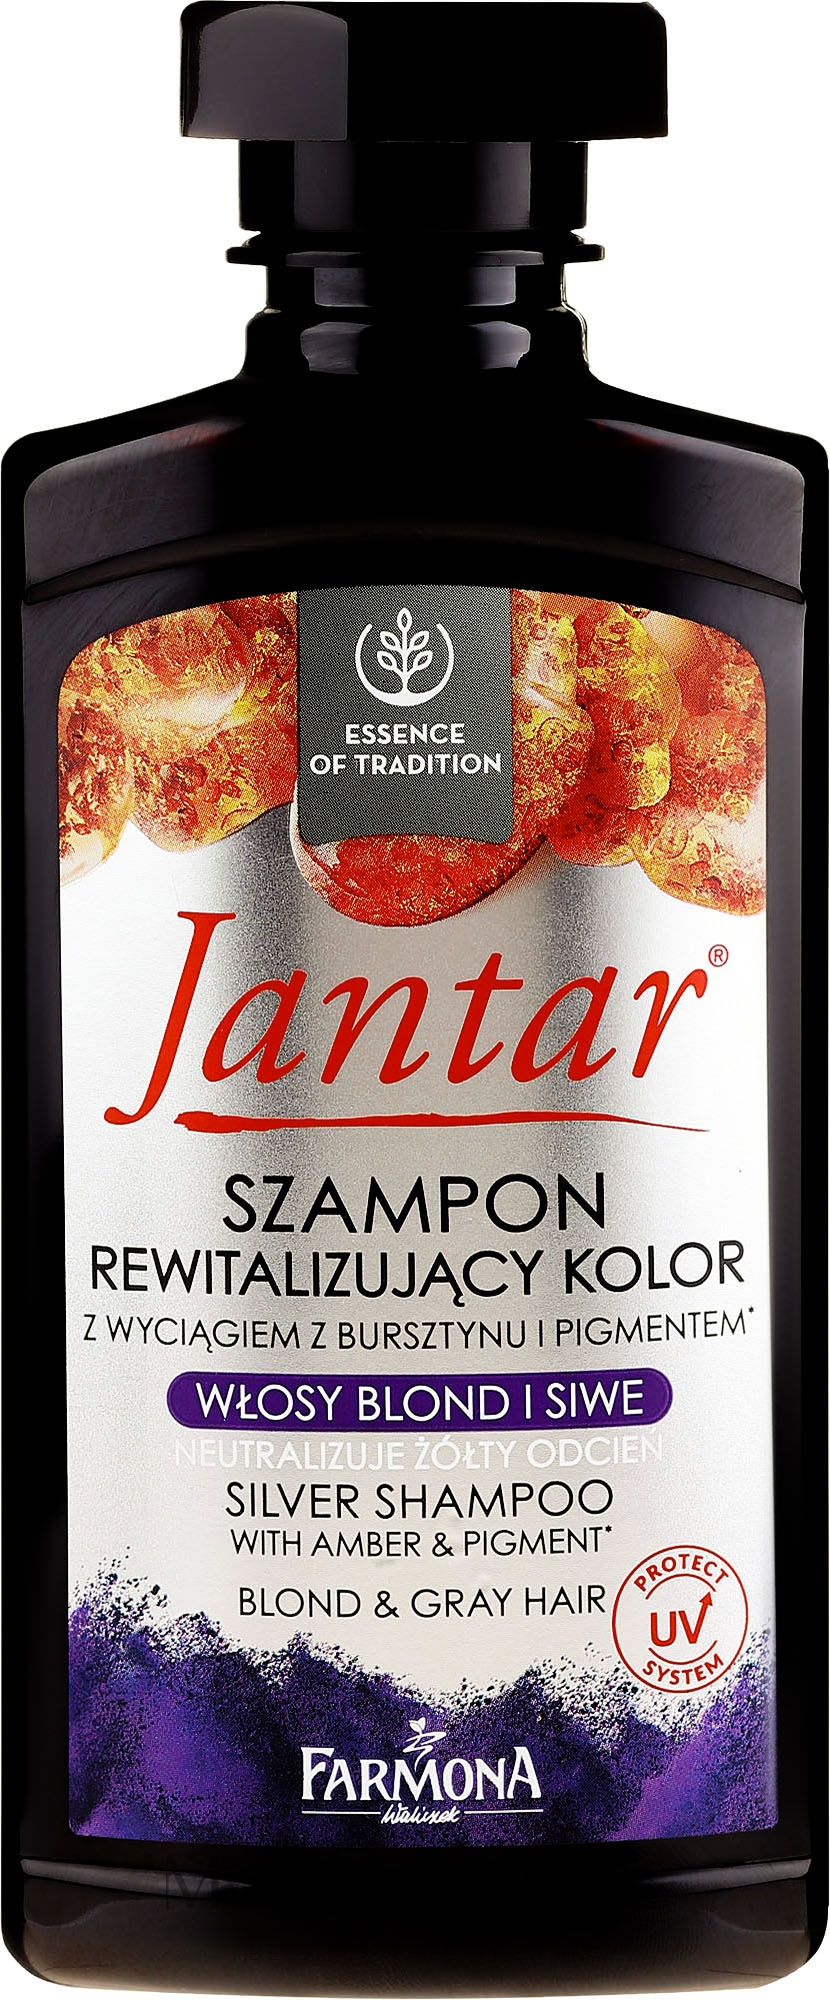 szampon jantar opinie blog